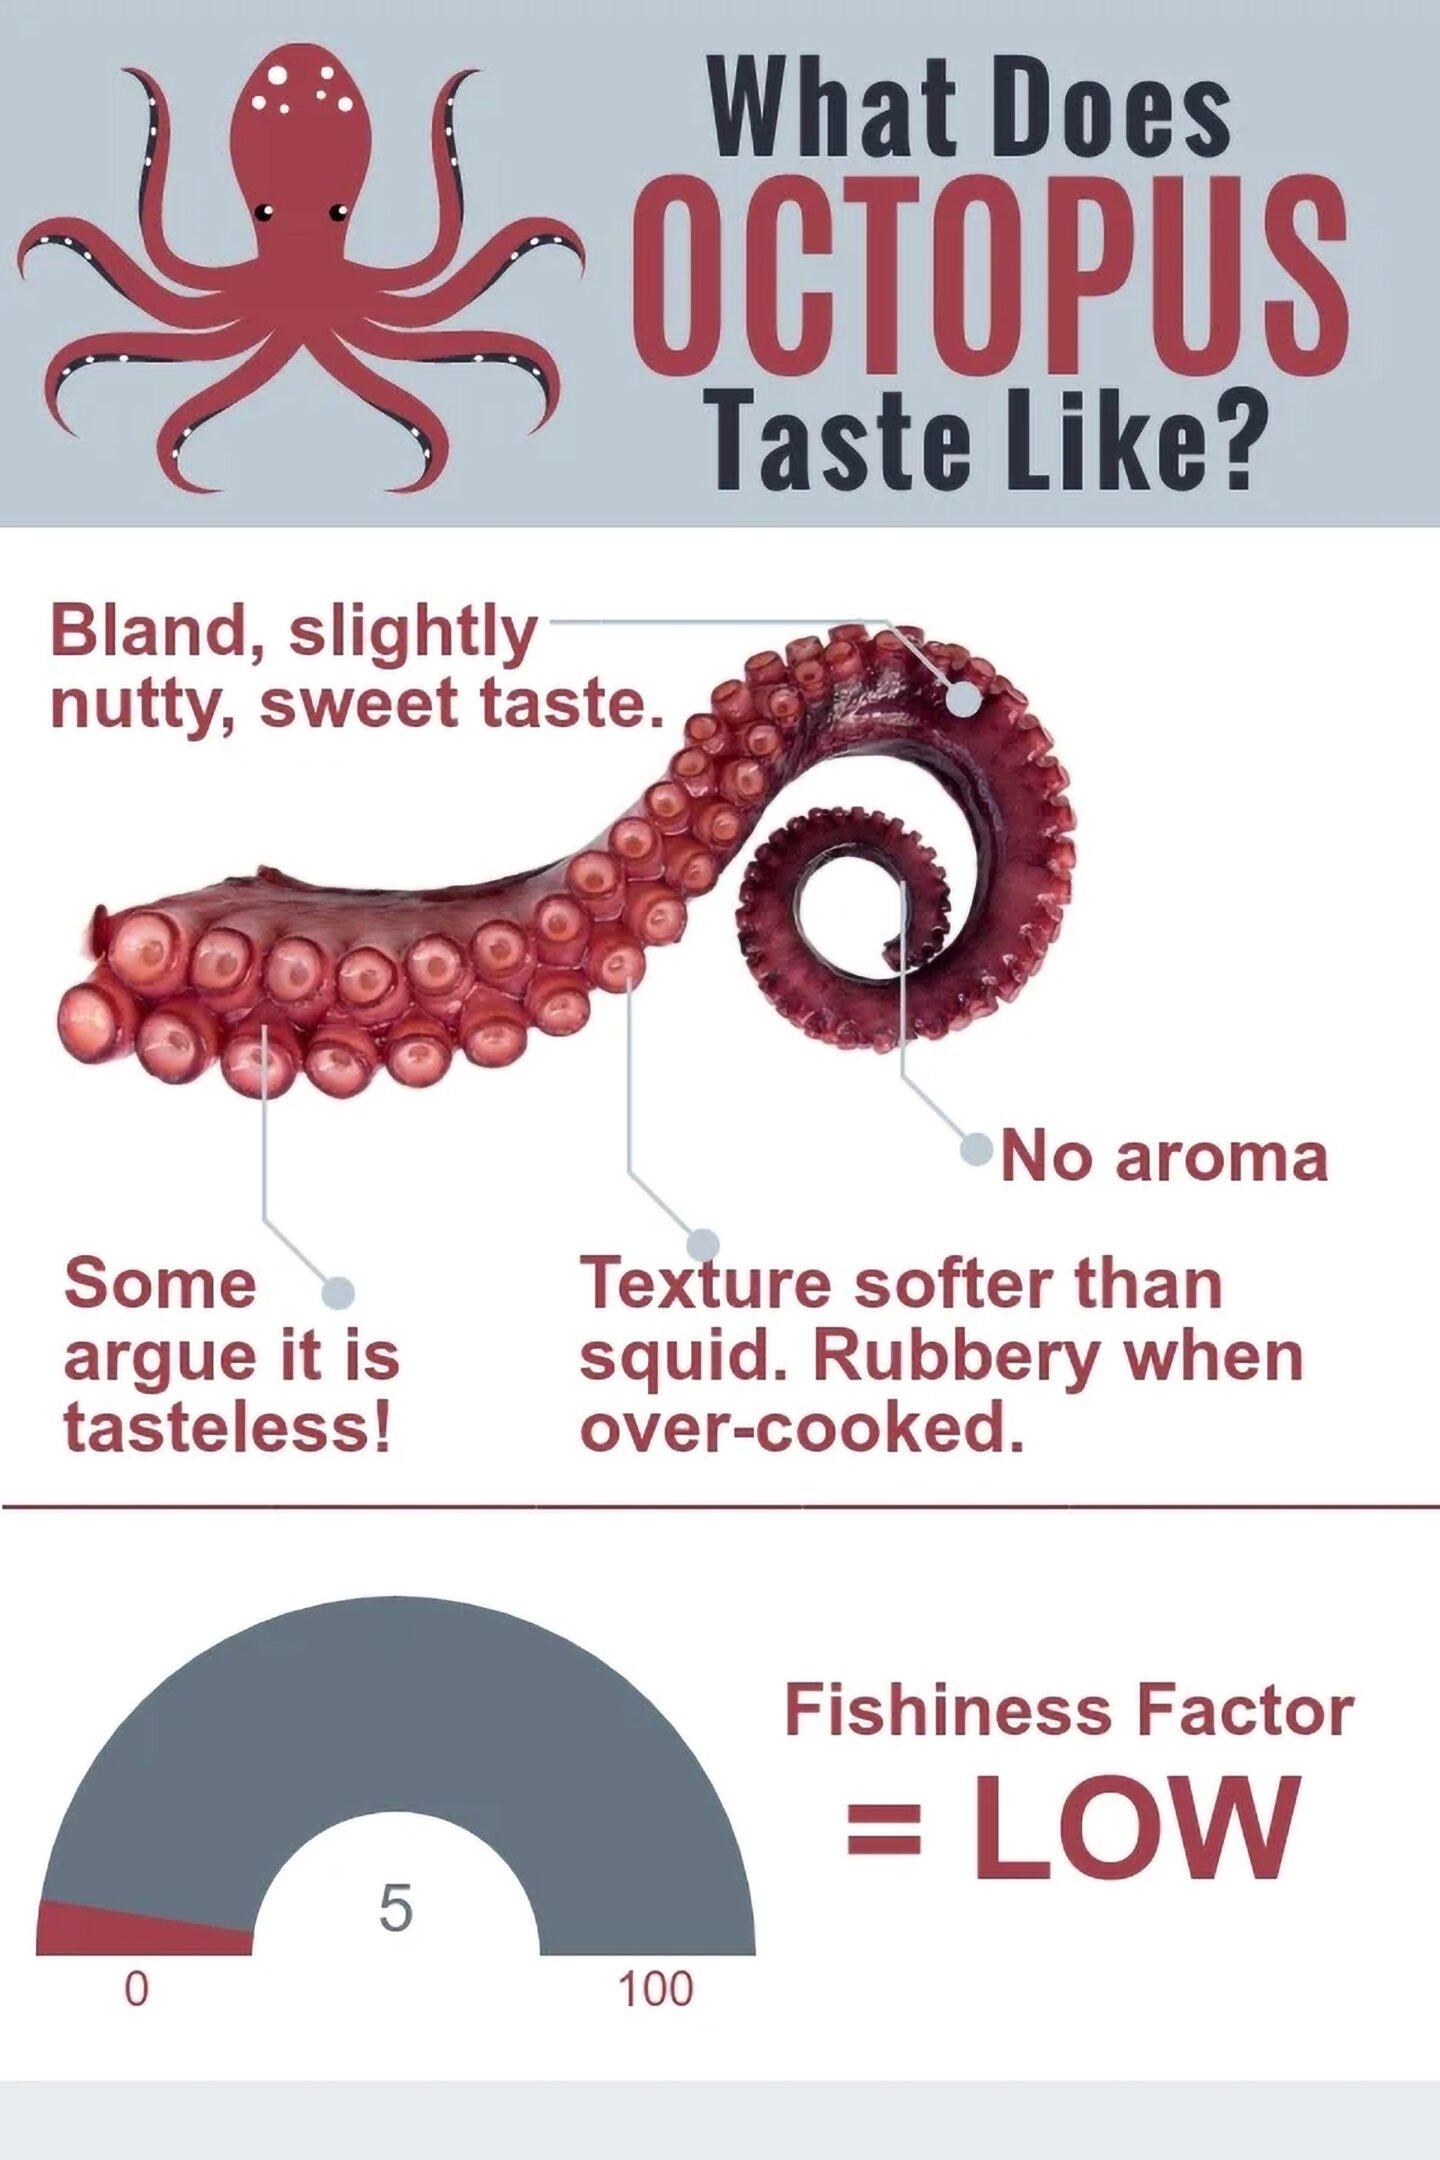 What does octopus taste like